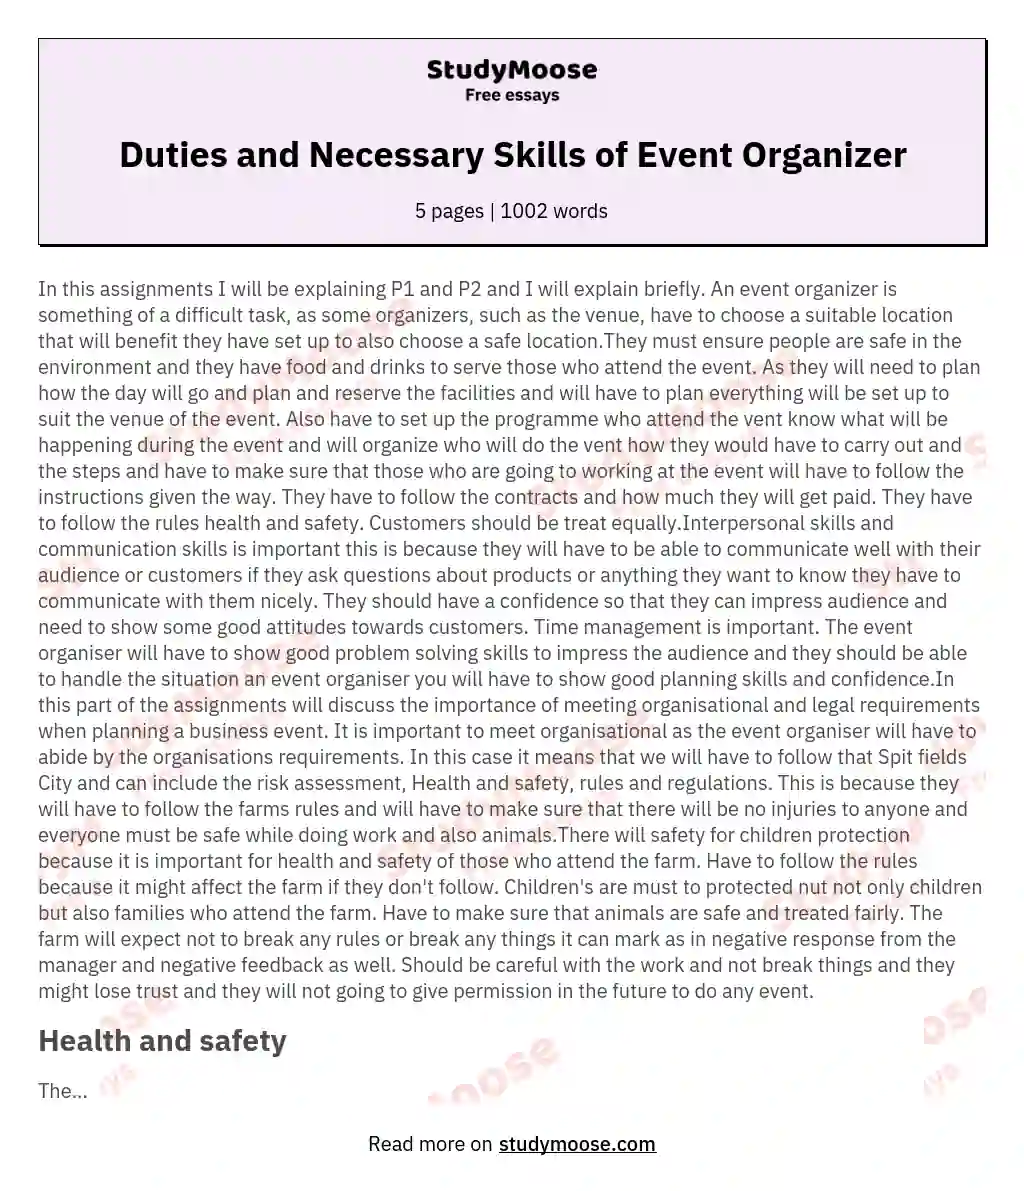 Duties and Necessary Skills of Event Organizer